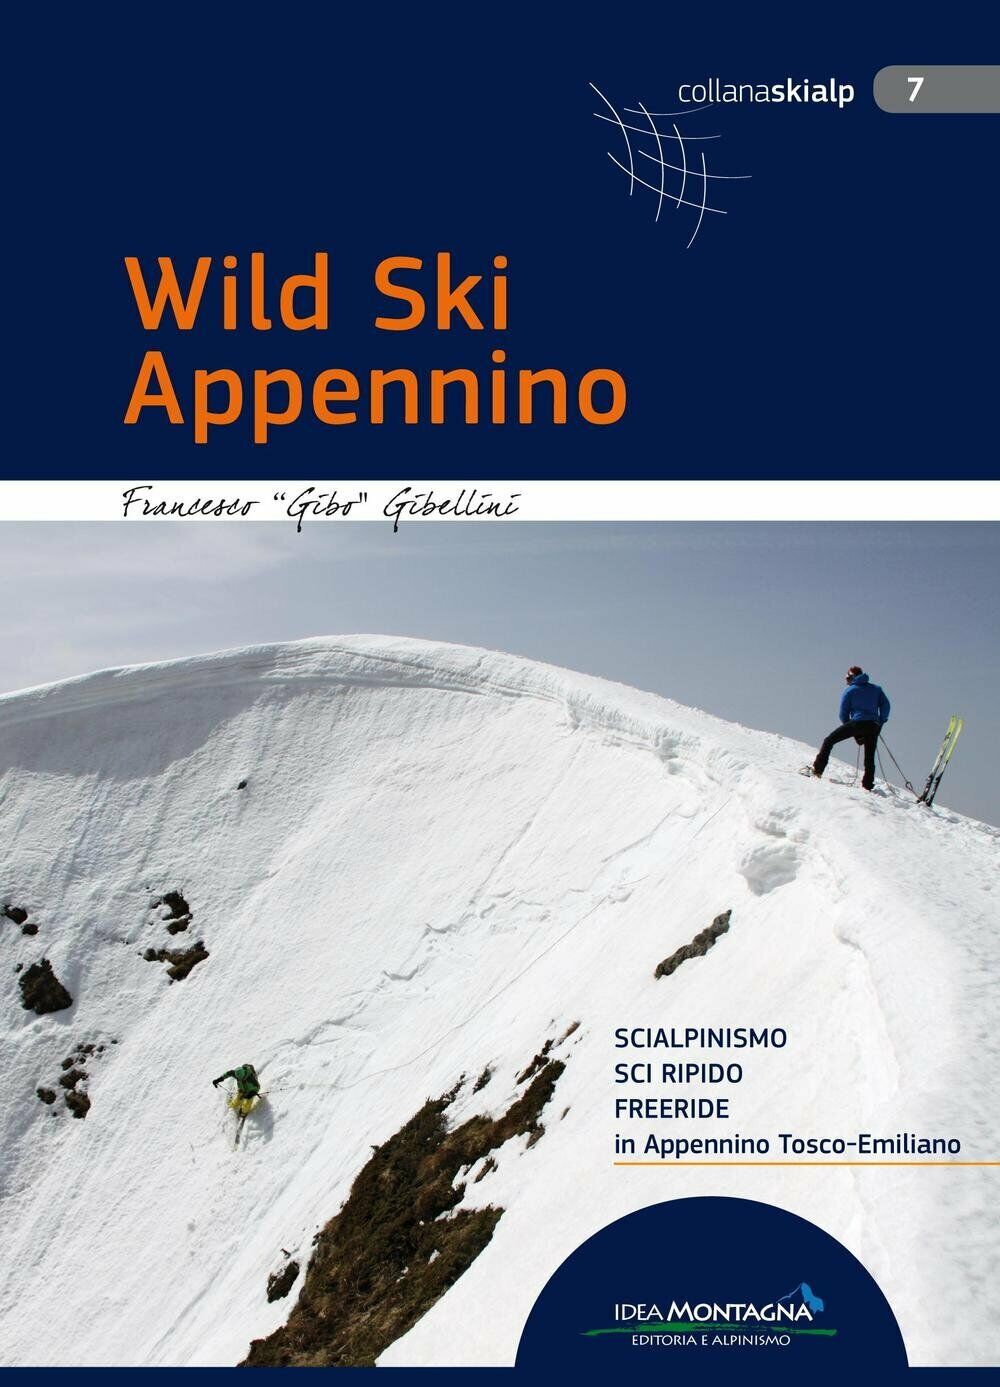 Wild Ski Appennino - Francesco Gibellini - idea montagna, 2016